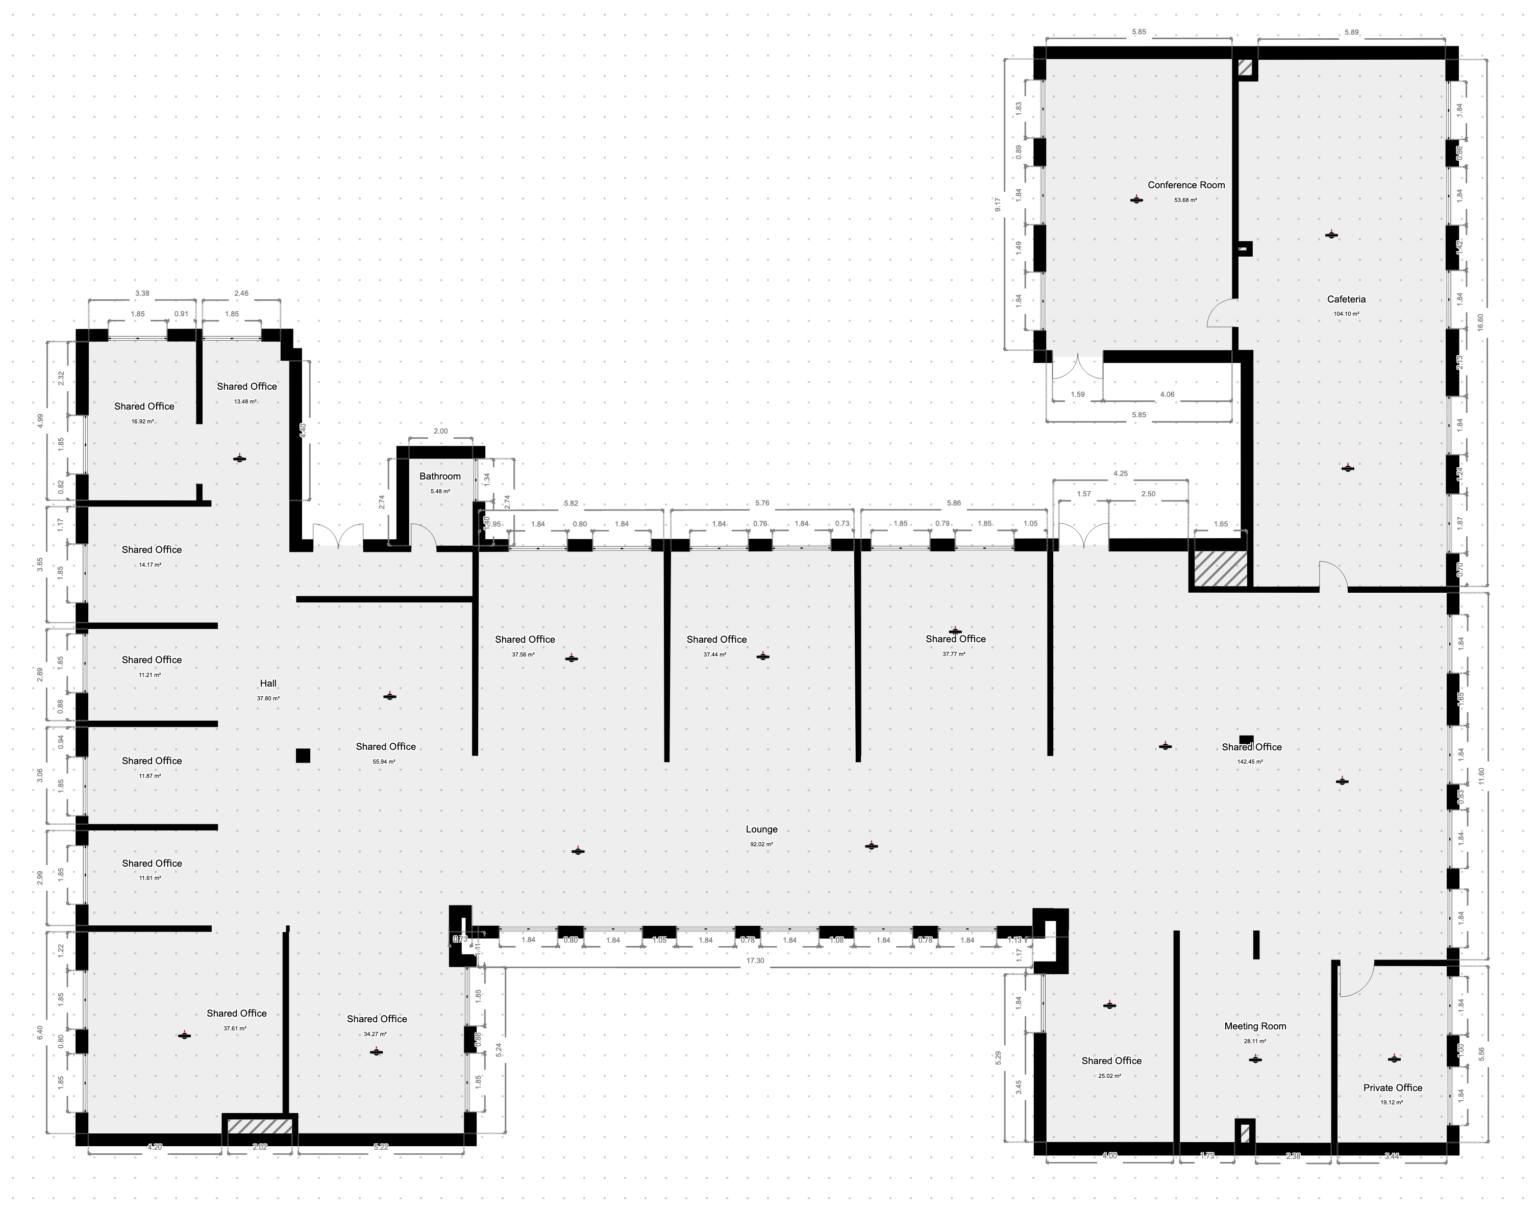 2D Floor Plan Of Offices